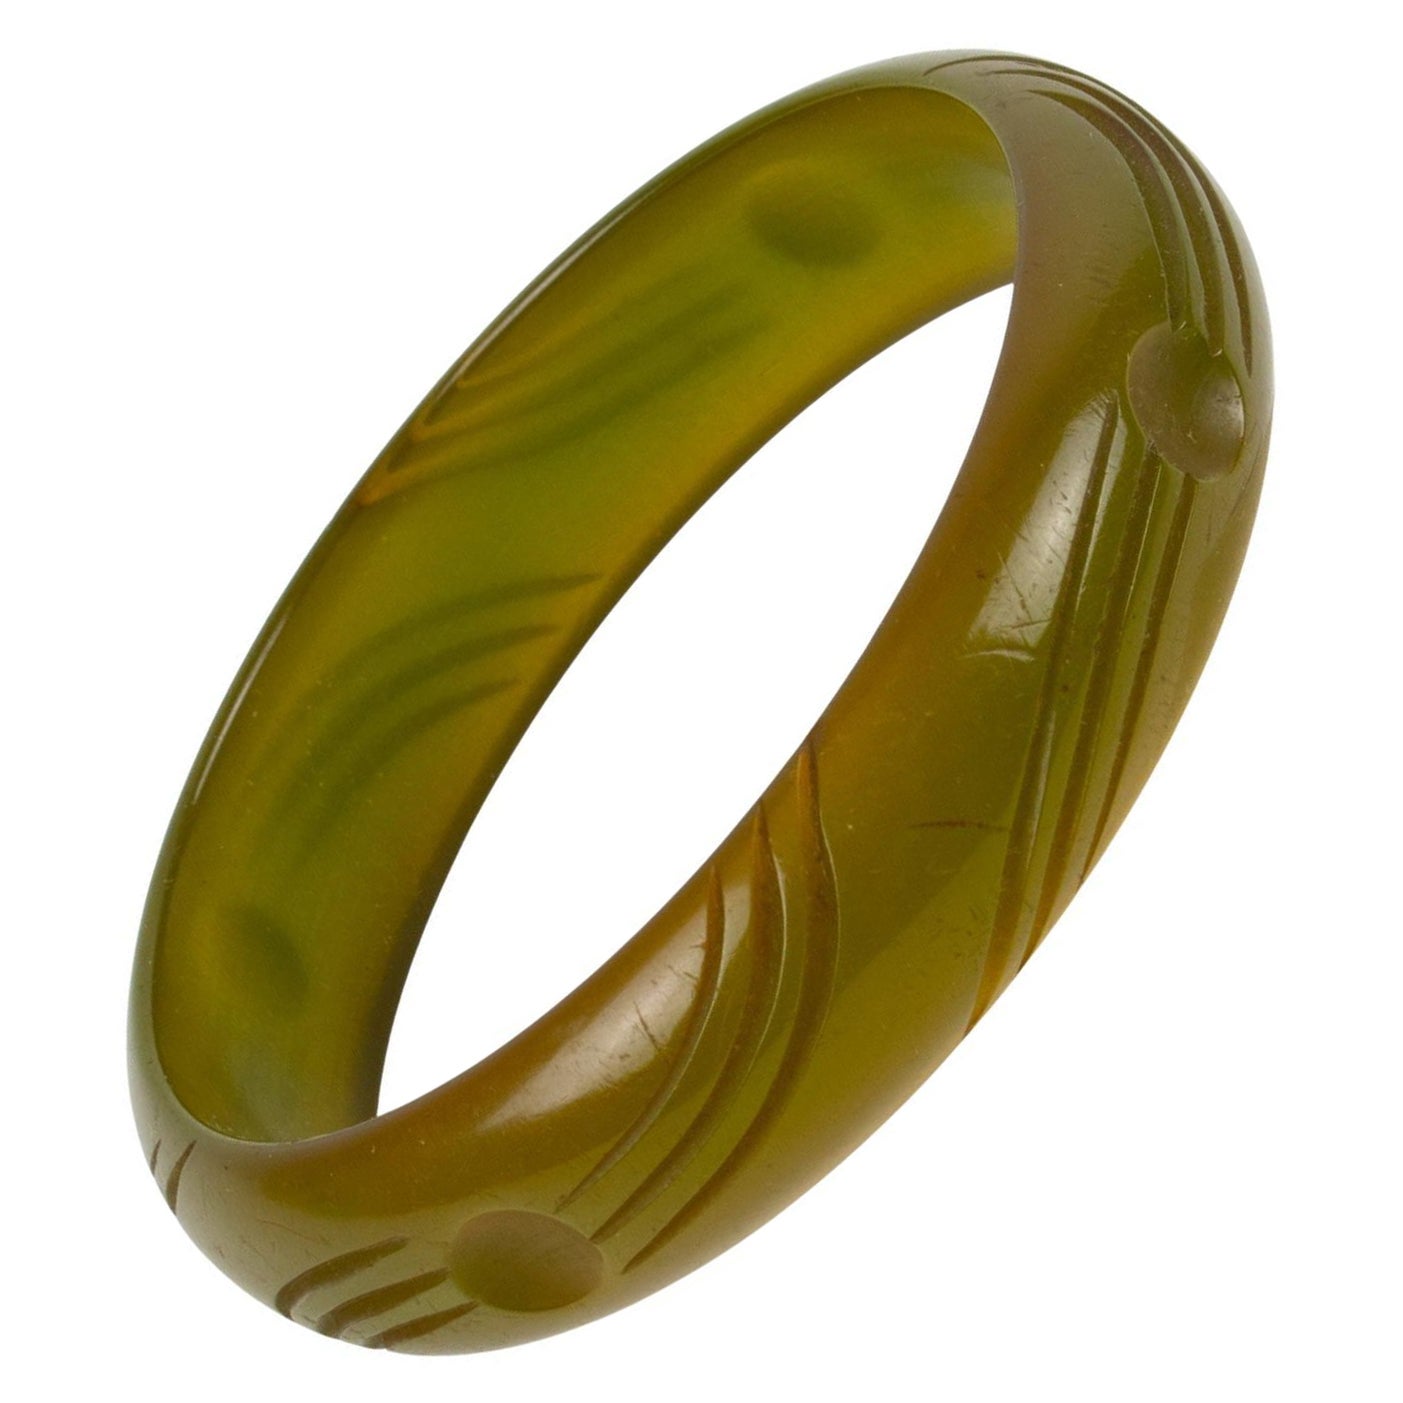 Bakelit geschnitzt Armband Armreif Translucent Asparagus Green im Angebot